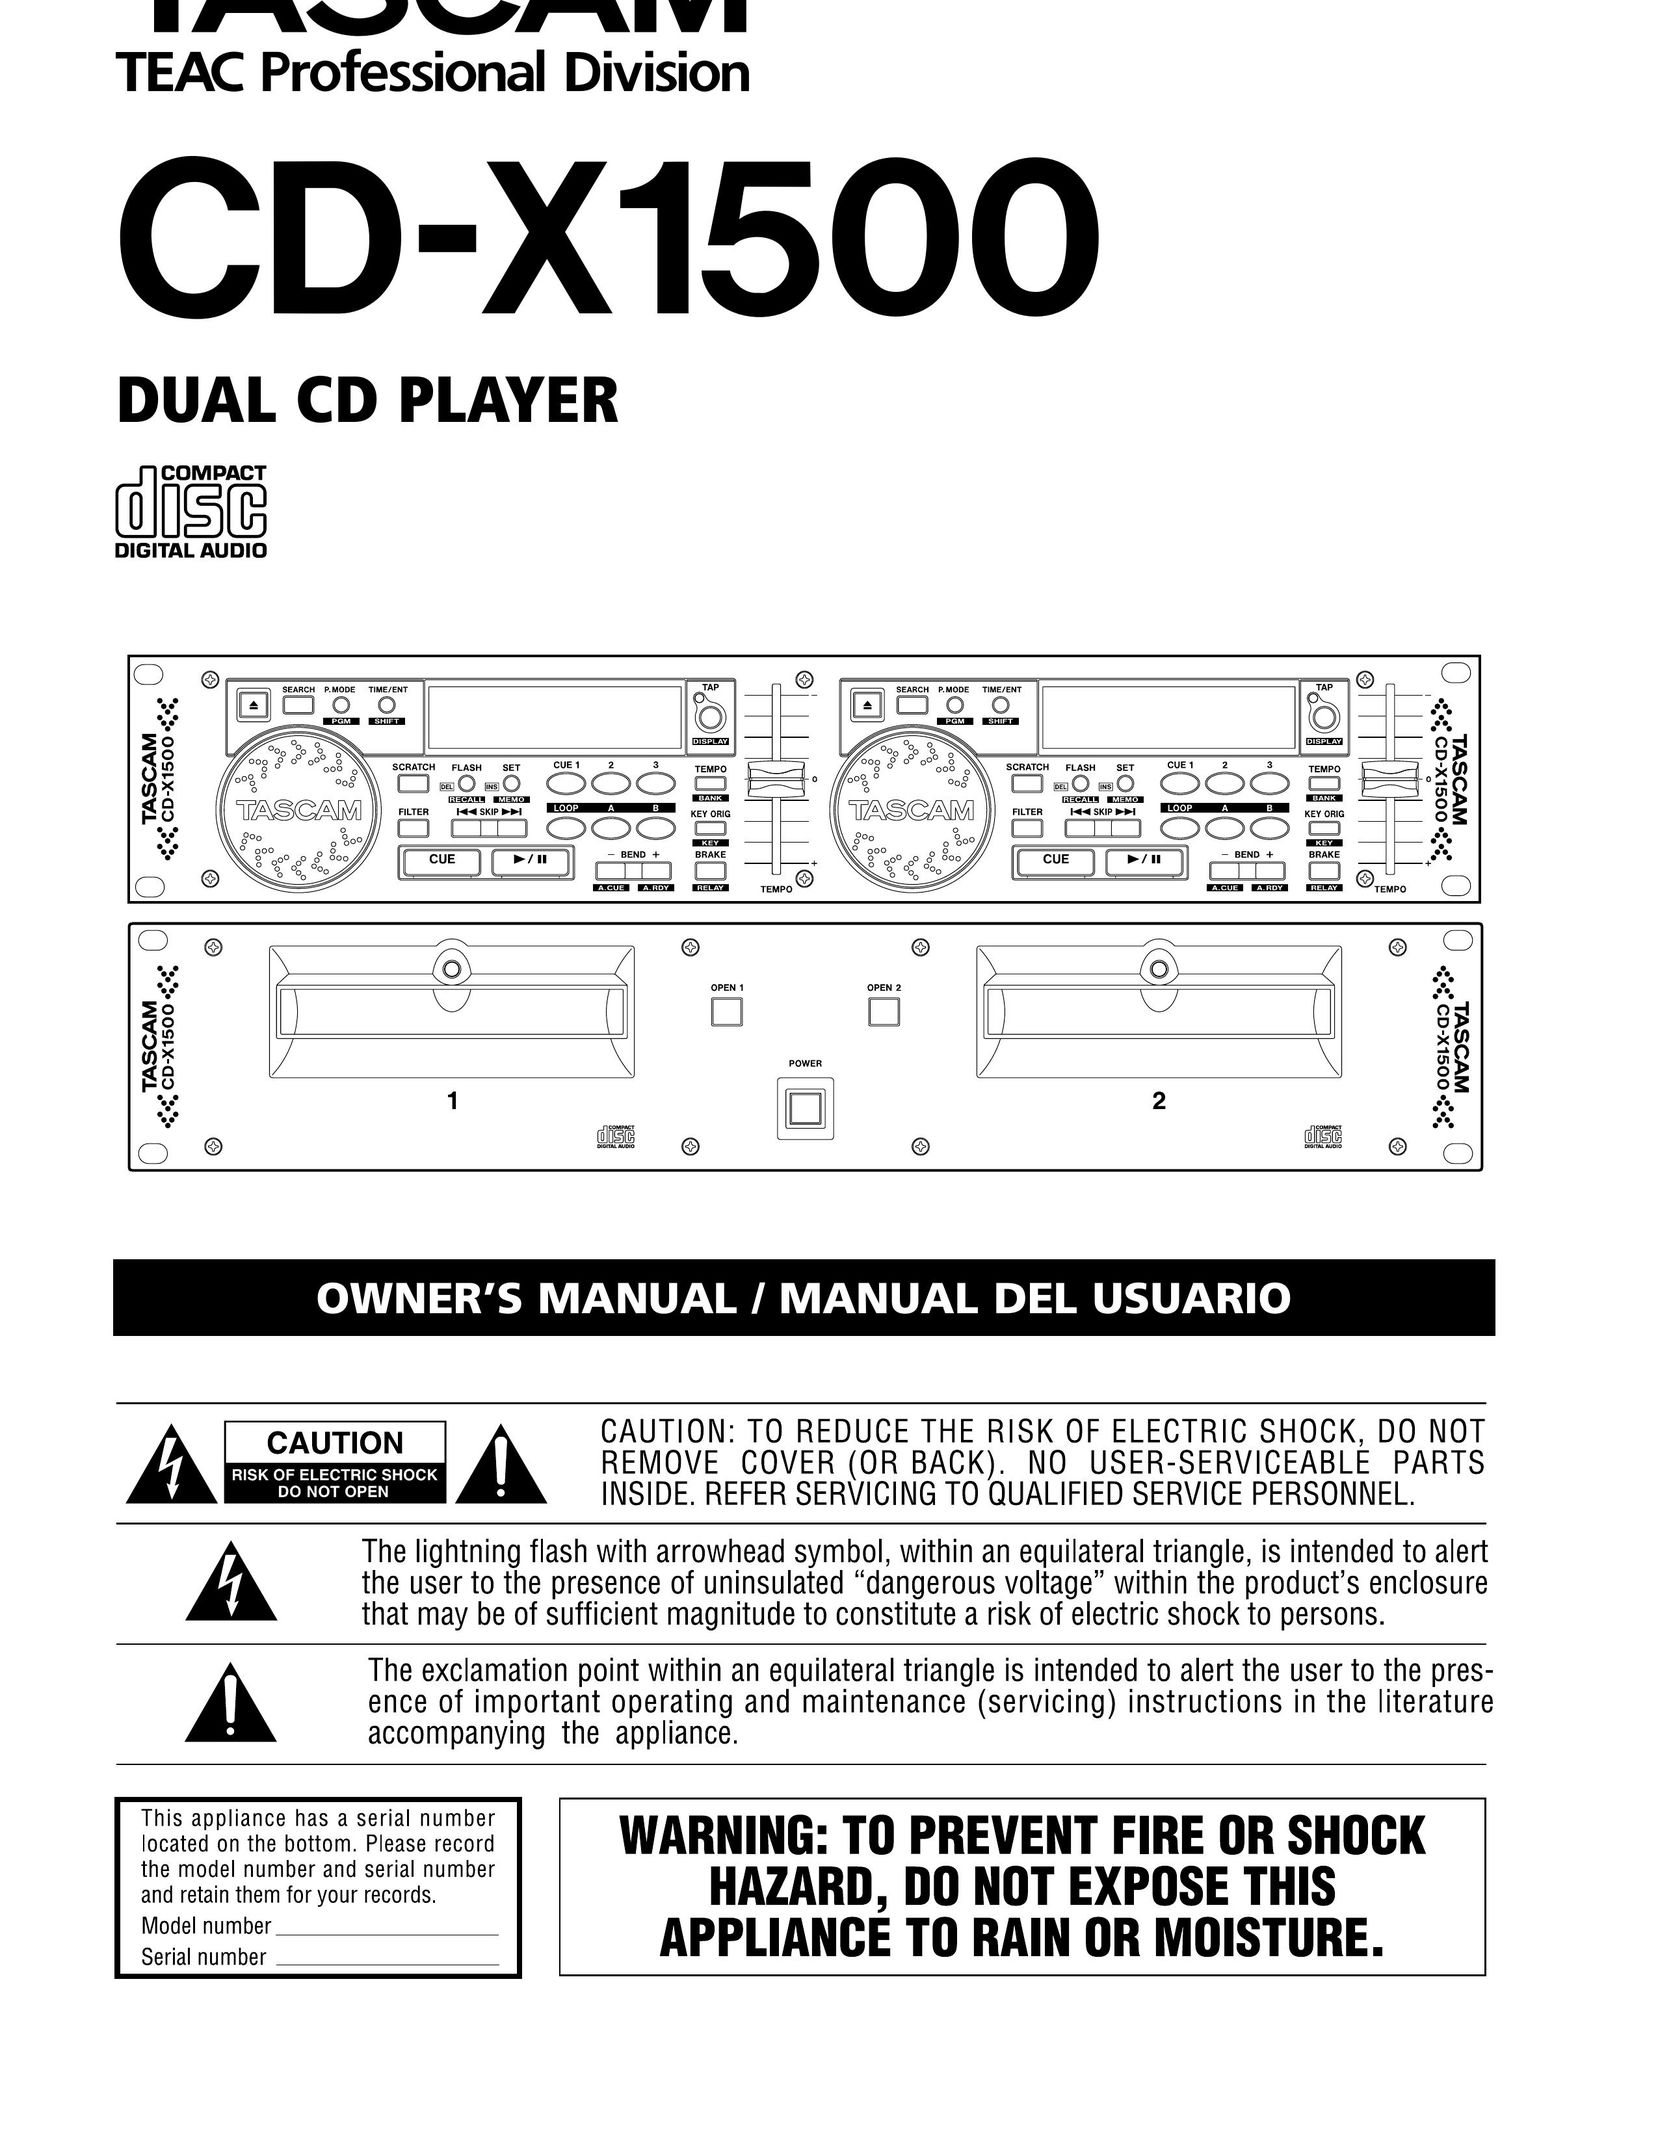 Sony CD-X1500 CD Player User Manual